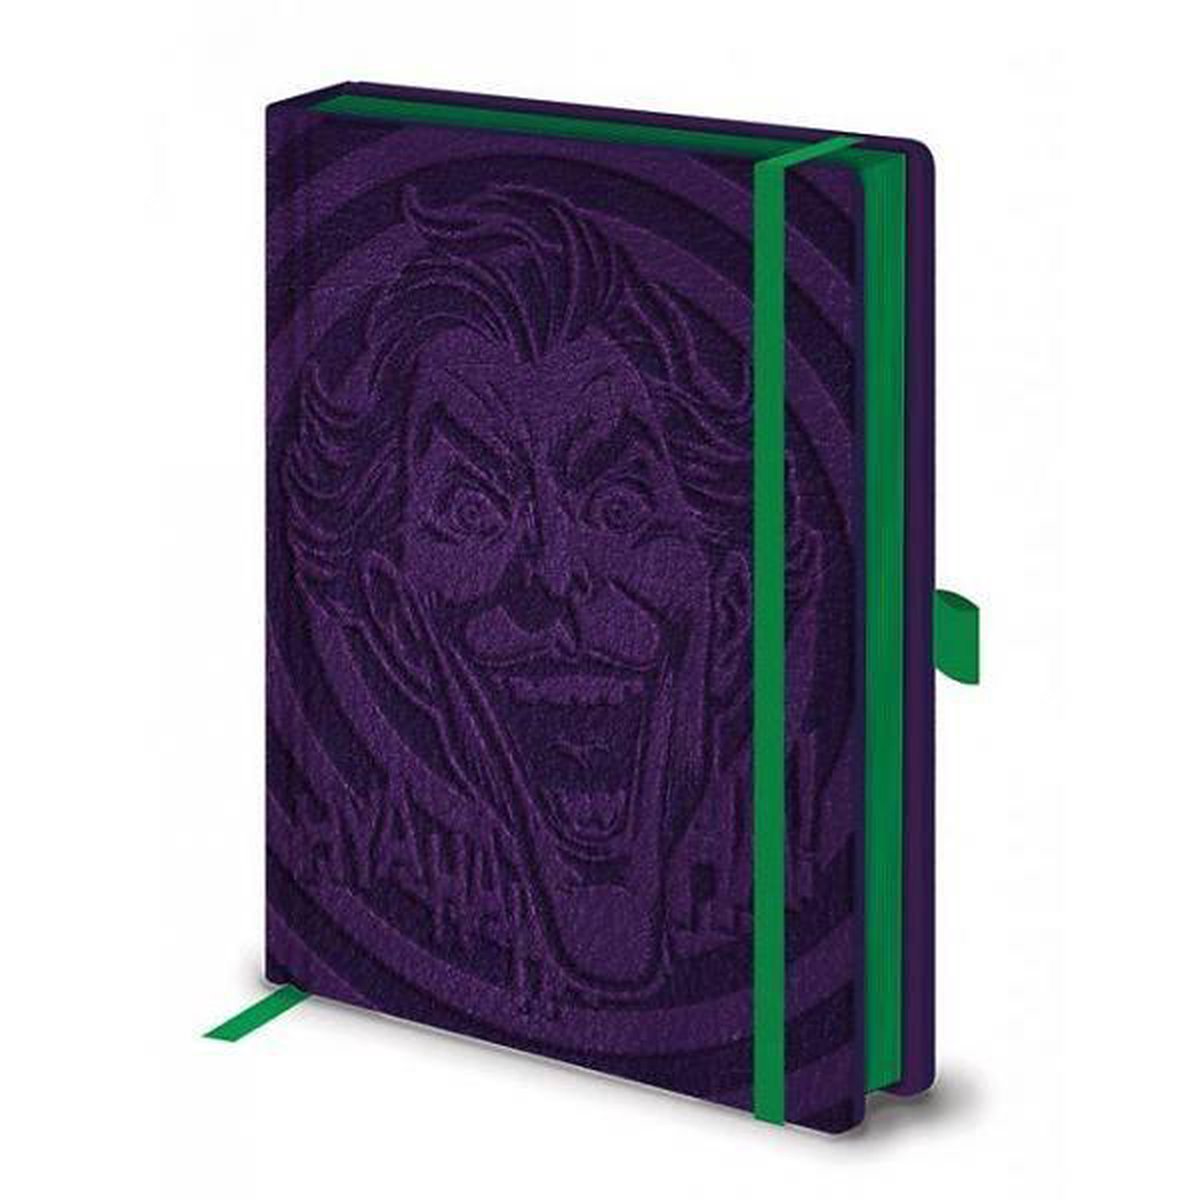 The joker HaHaHa - Premium A5 Notitieboek